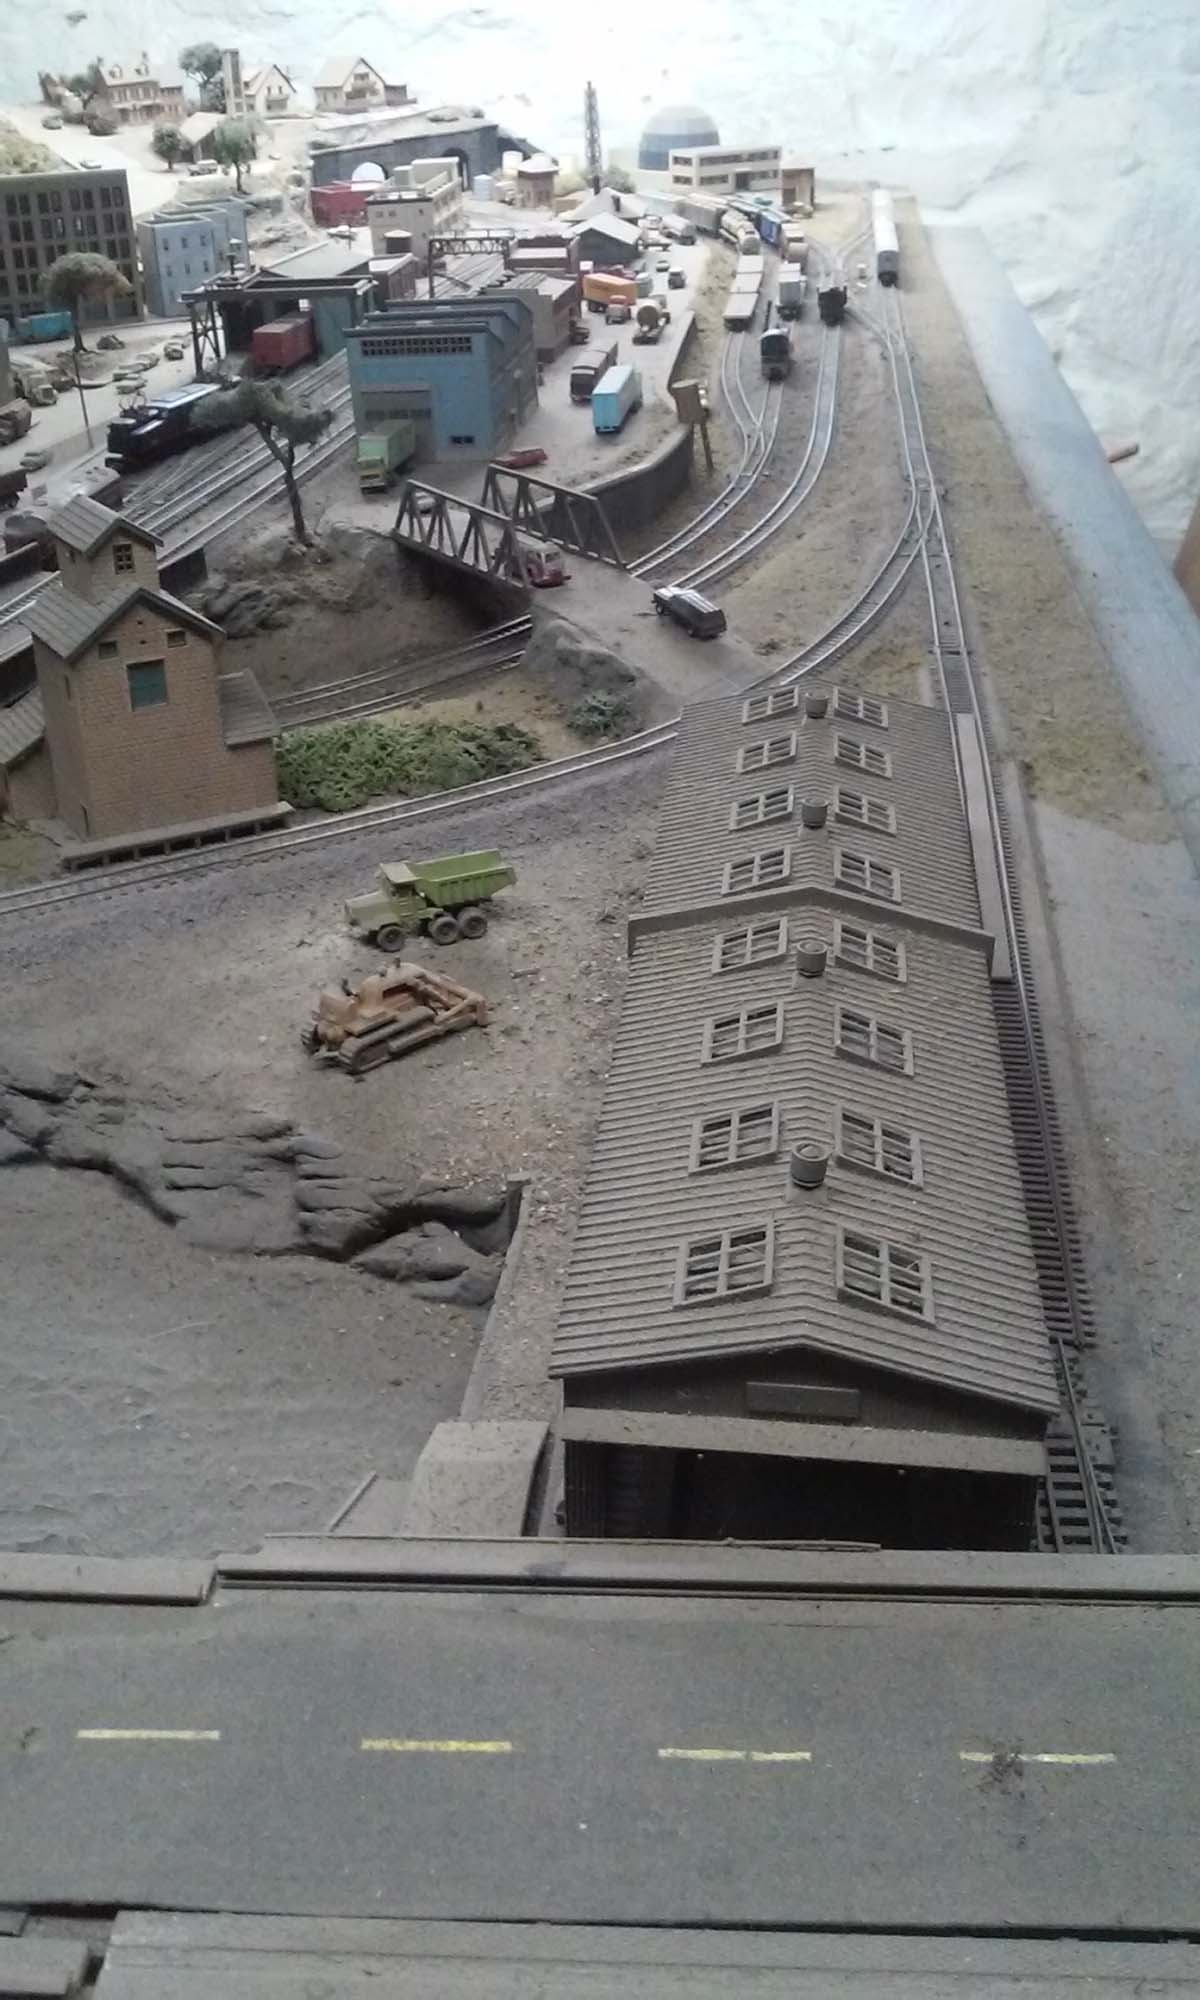 basement train layouts